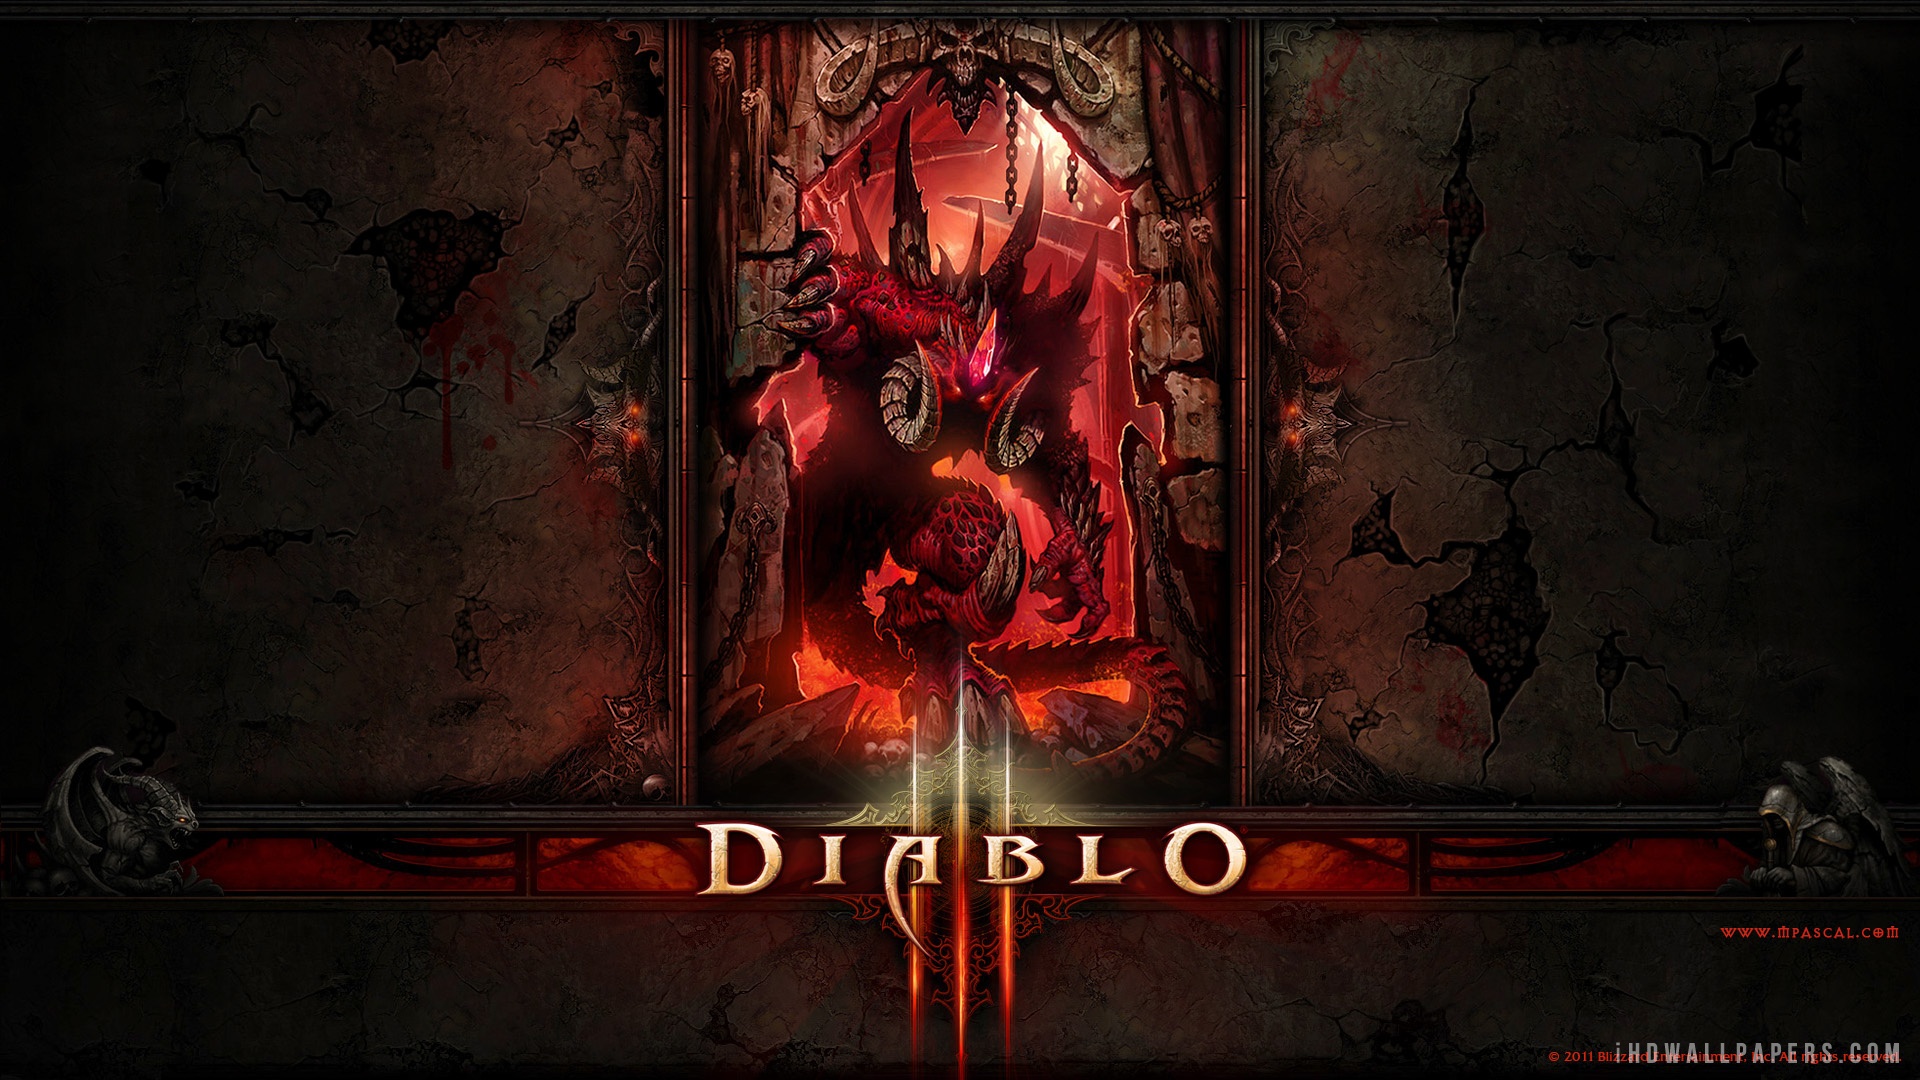 Description Download Diablo 3 WallpaperBackground in 1920x1080 HD